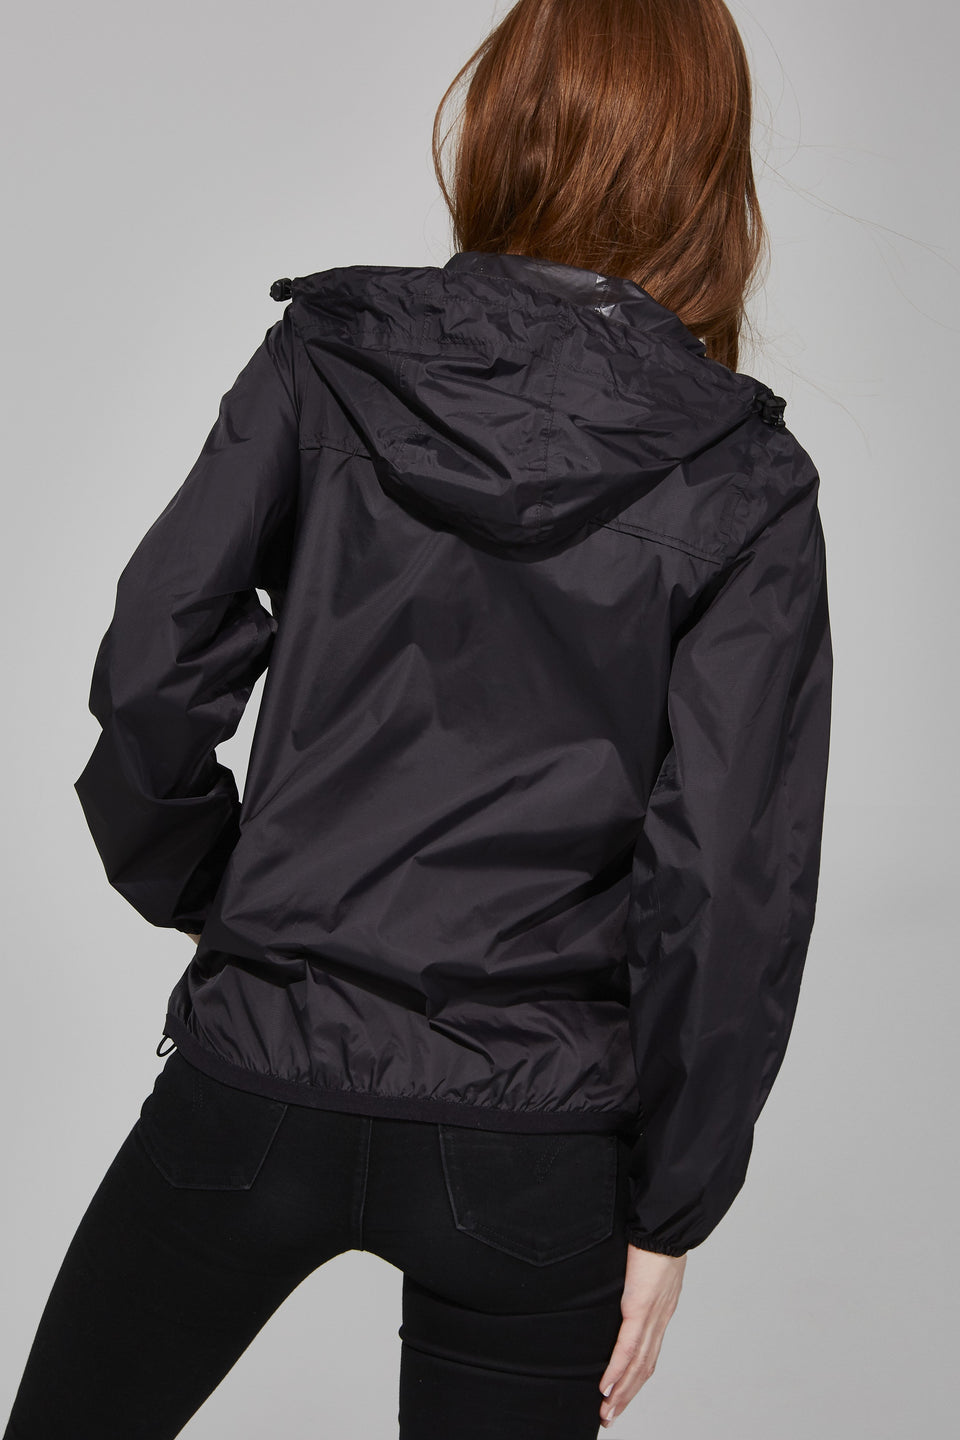 Sloane - Black Full Zip Packable Rain Jacket | Coats & Jackets ...